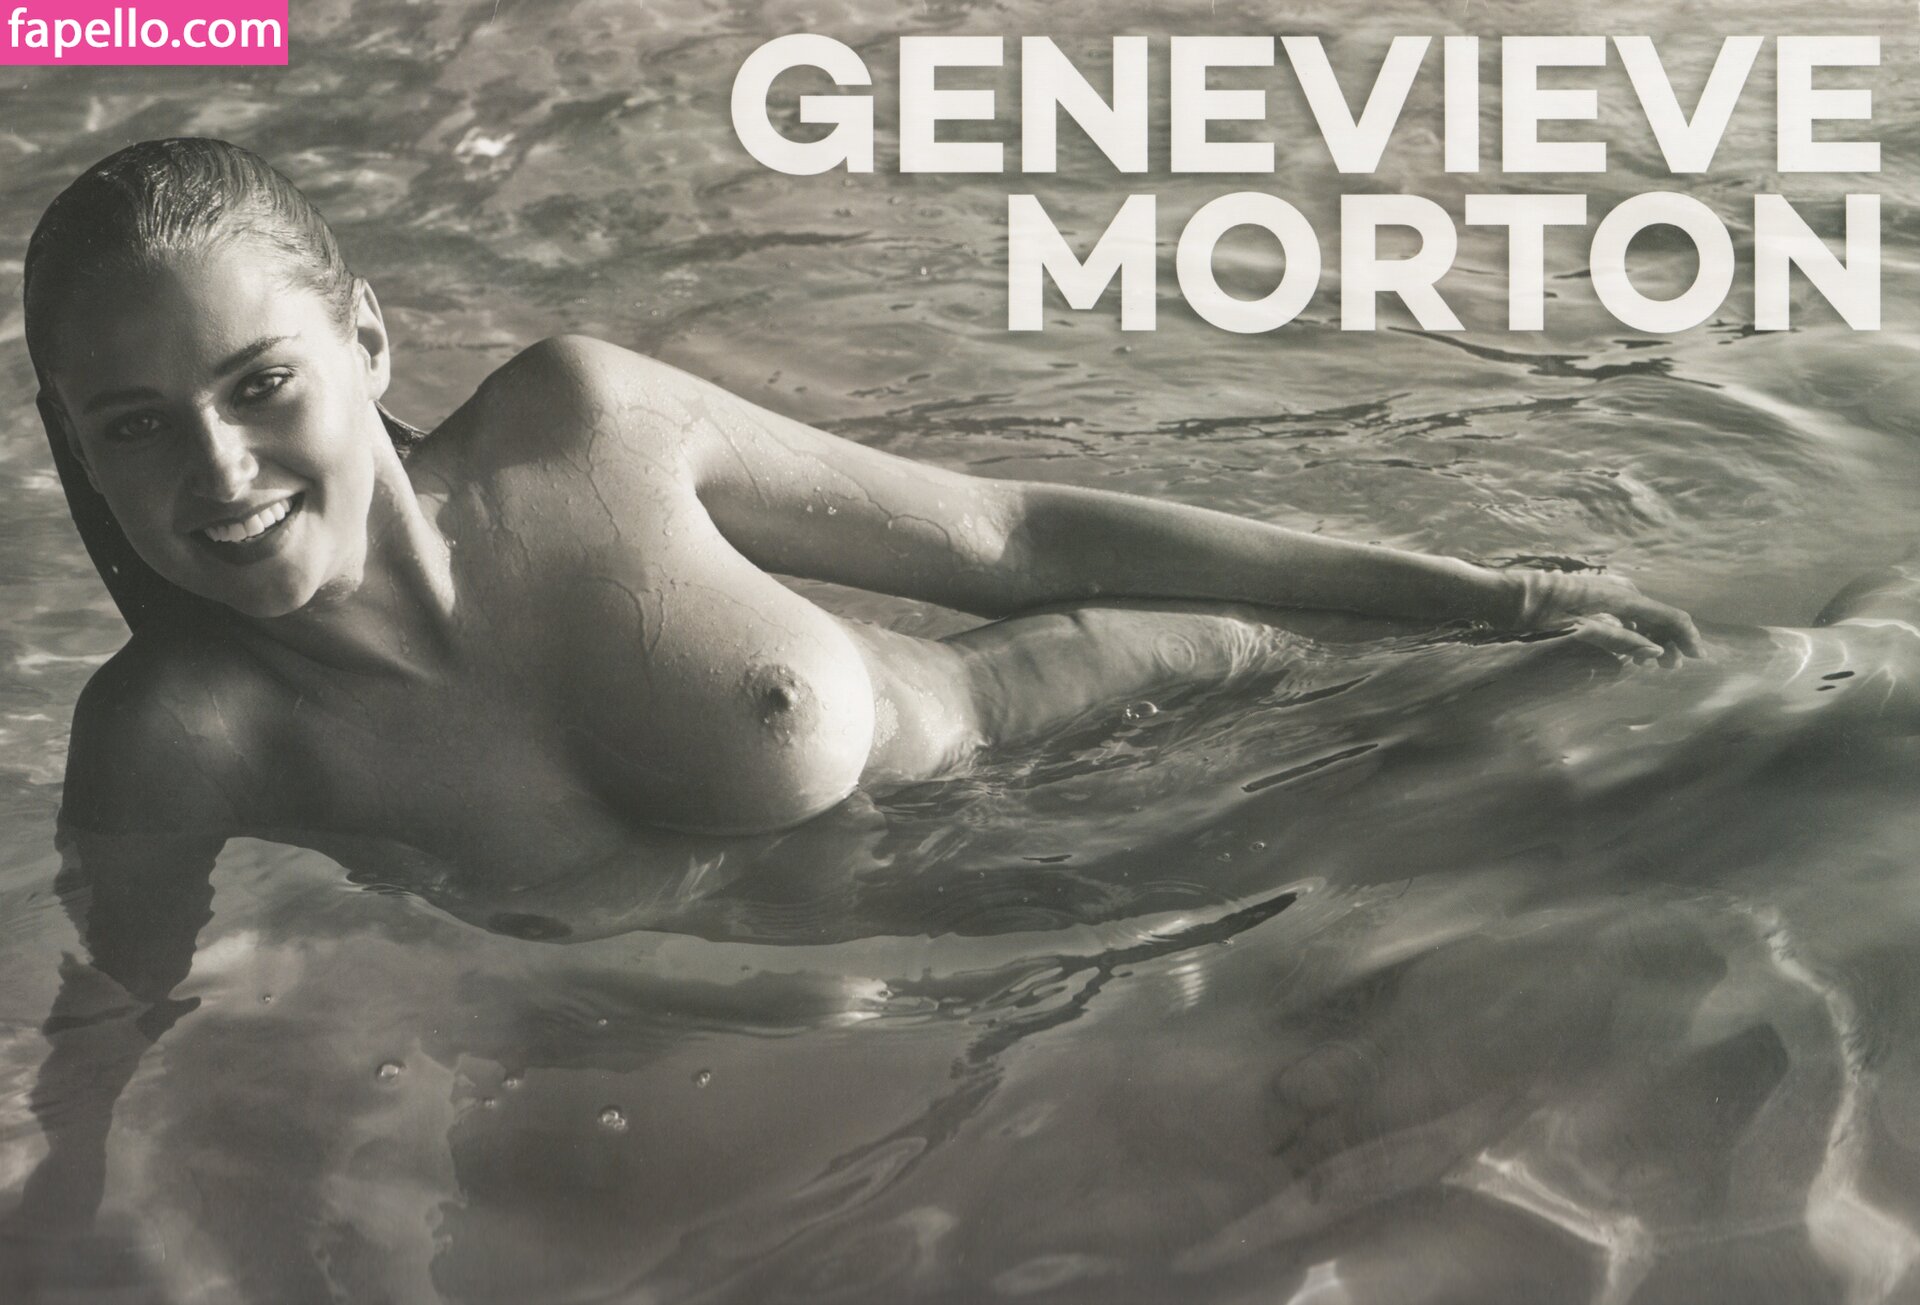 Genevieve Morton